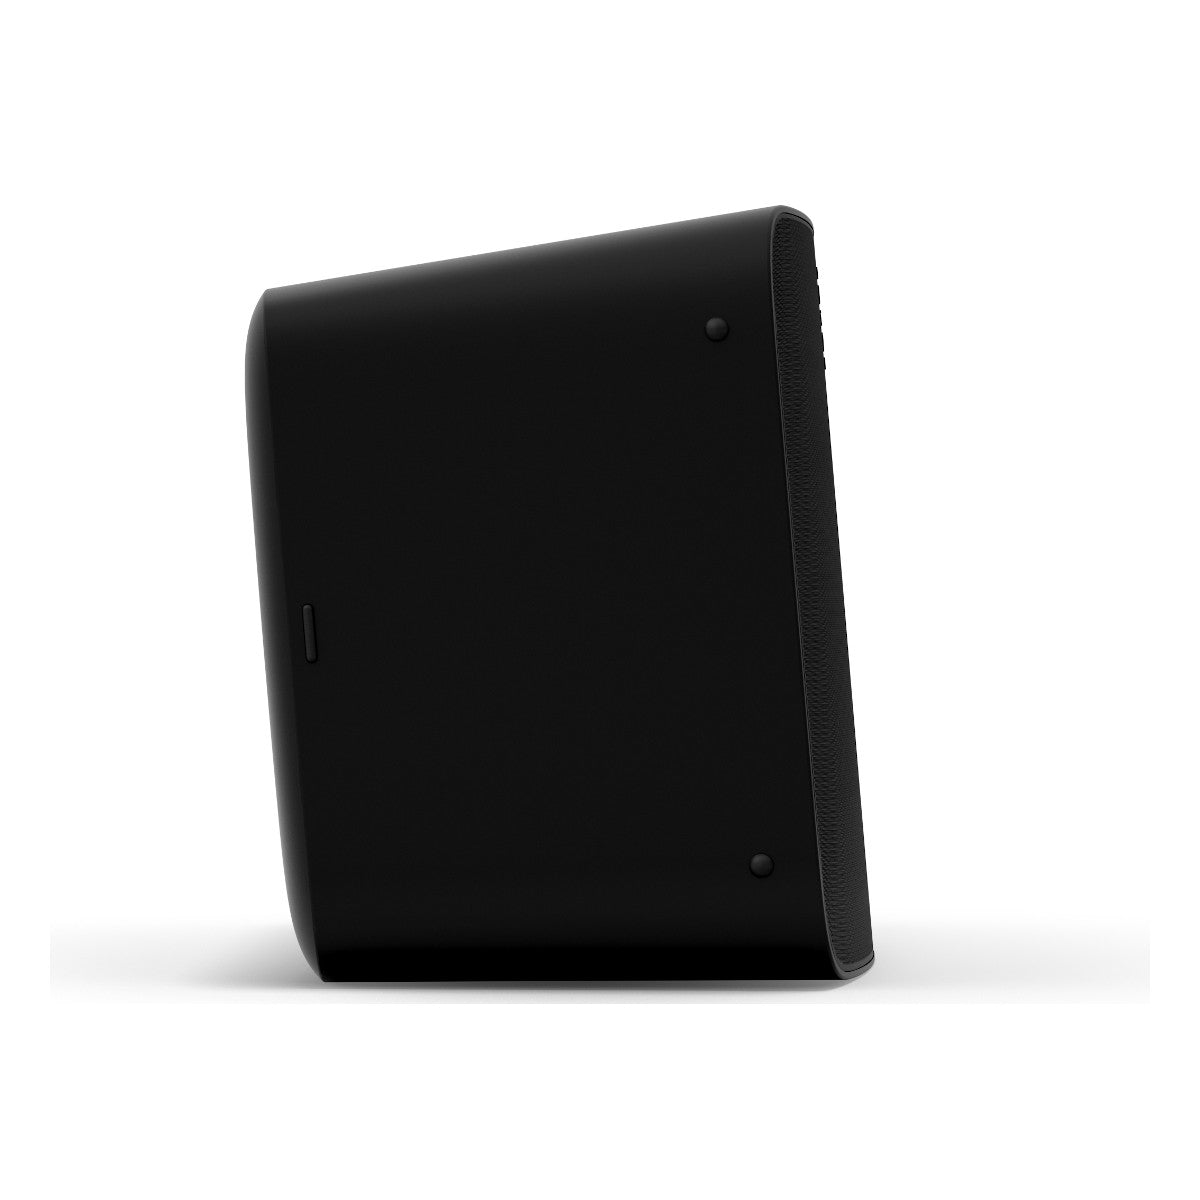 Sonos Five Wireless Speaker for Streaming Music with Sanus Wireless Speaker Stand - Each (Black)